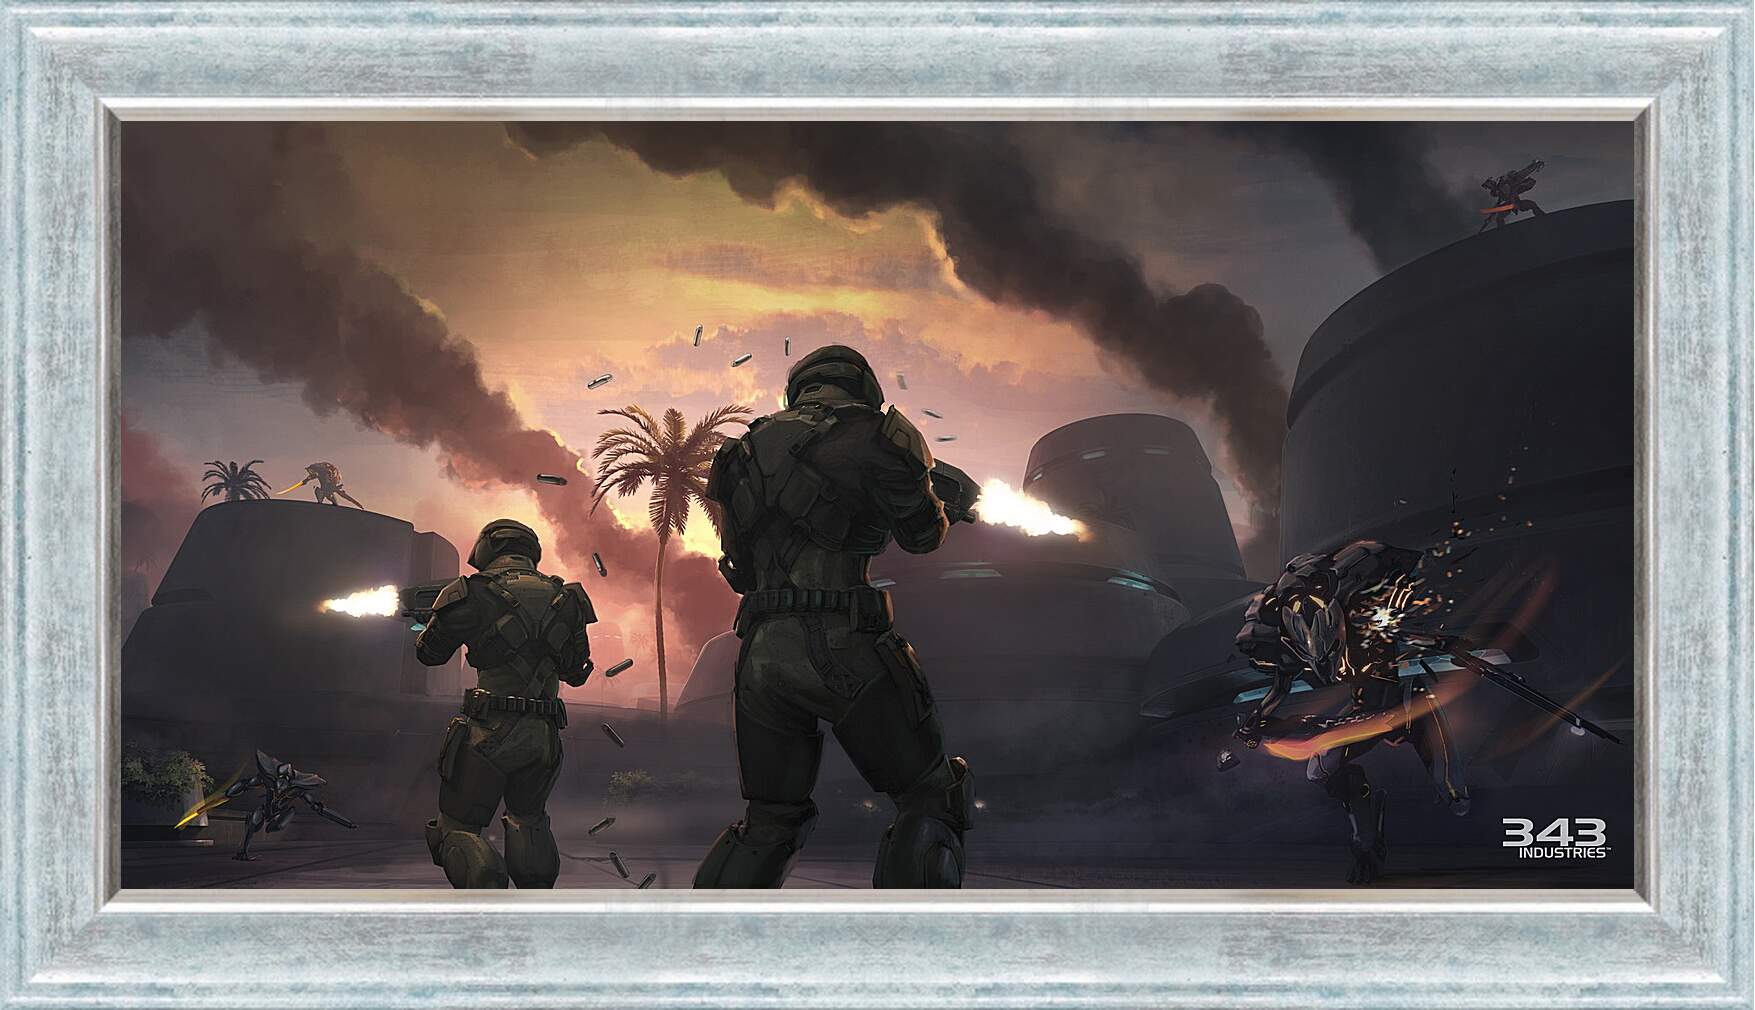 Картина в раме - Halo: Spartan Strike